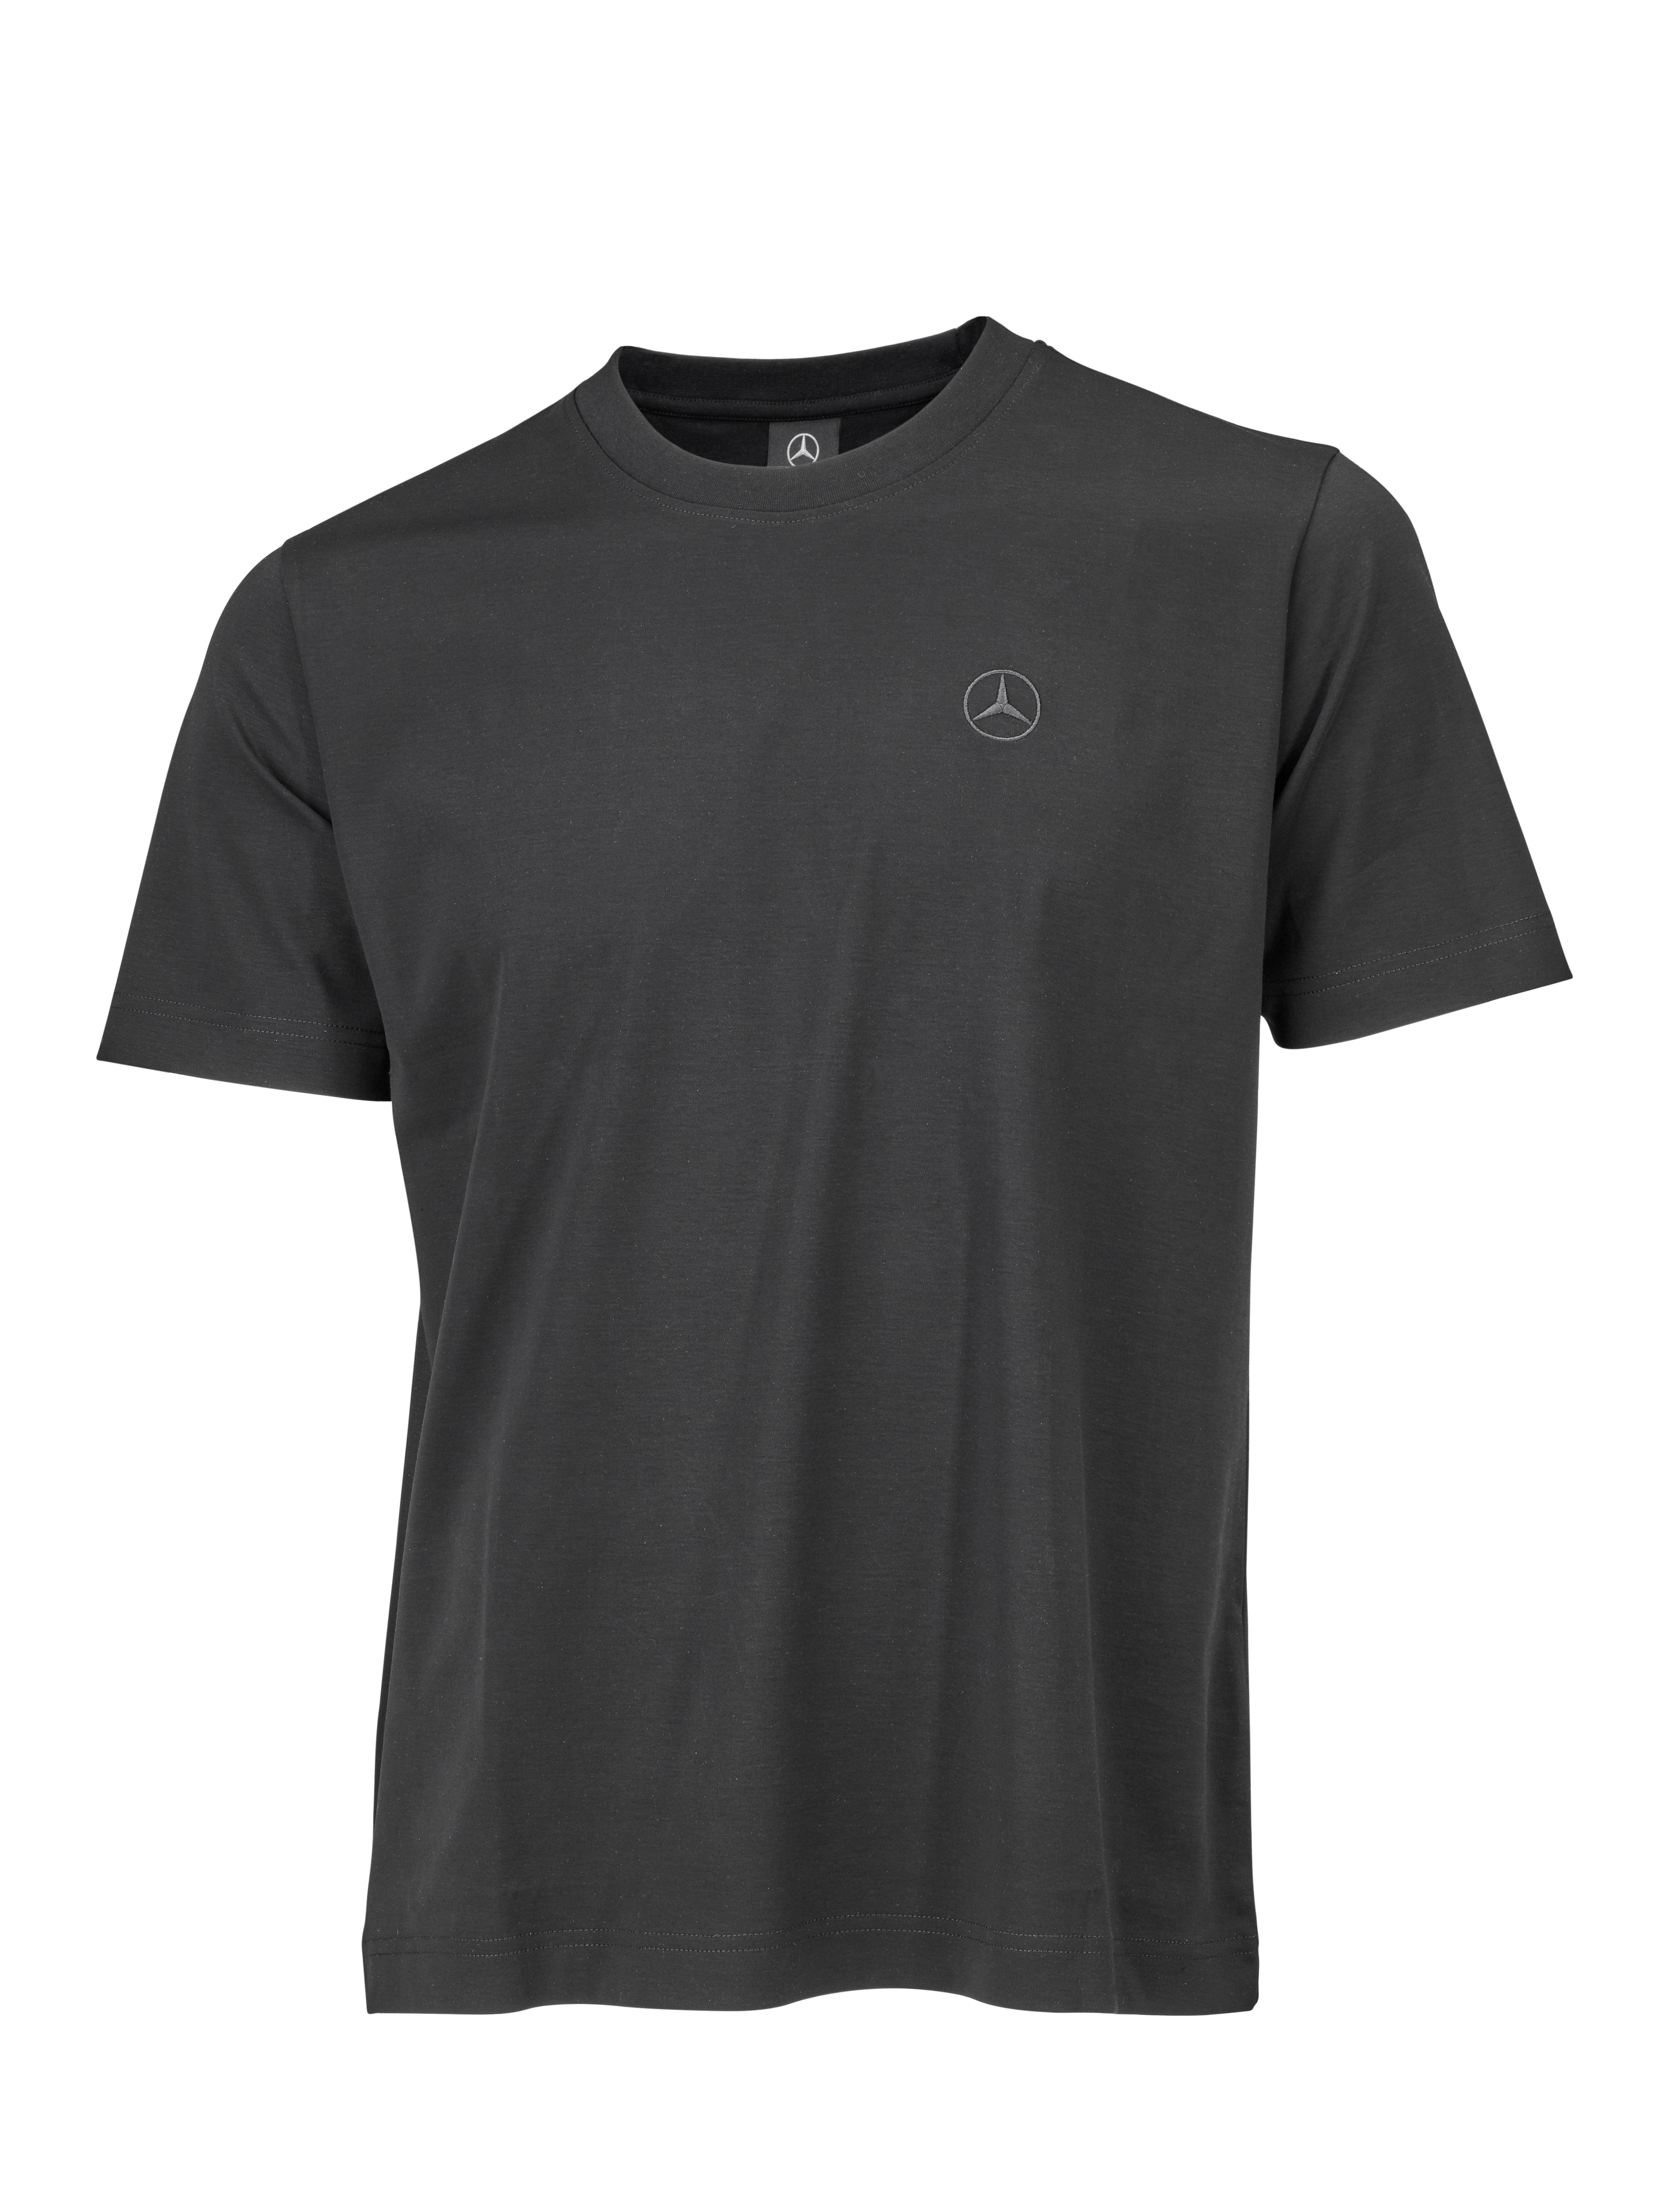 T-Shirt Unisex - schwarz, XXXL